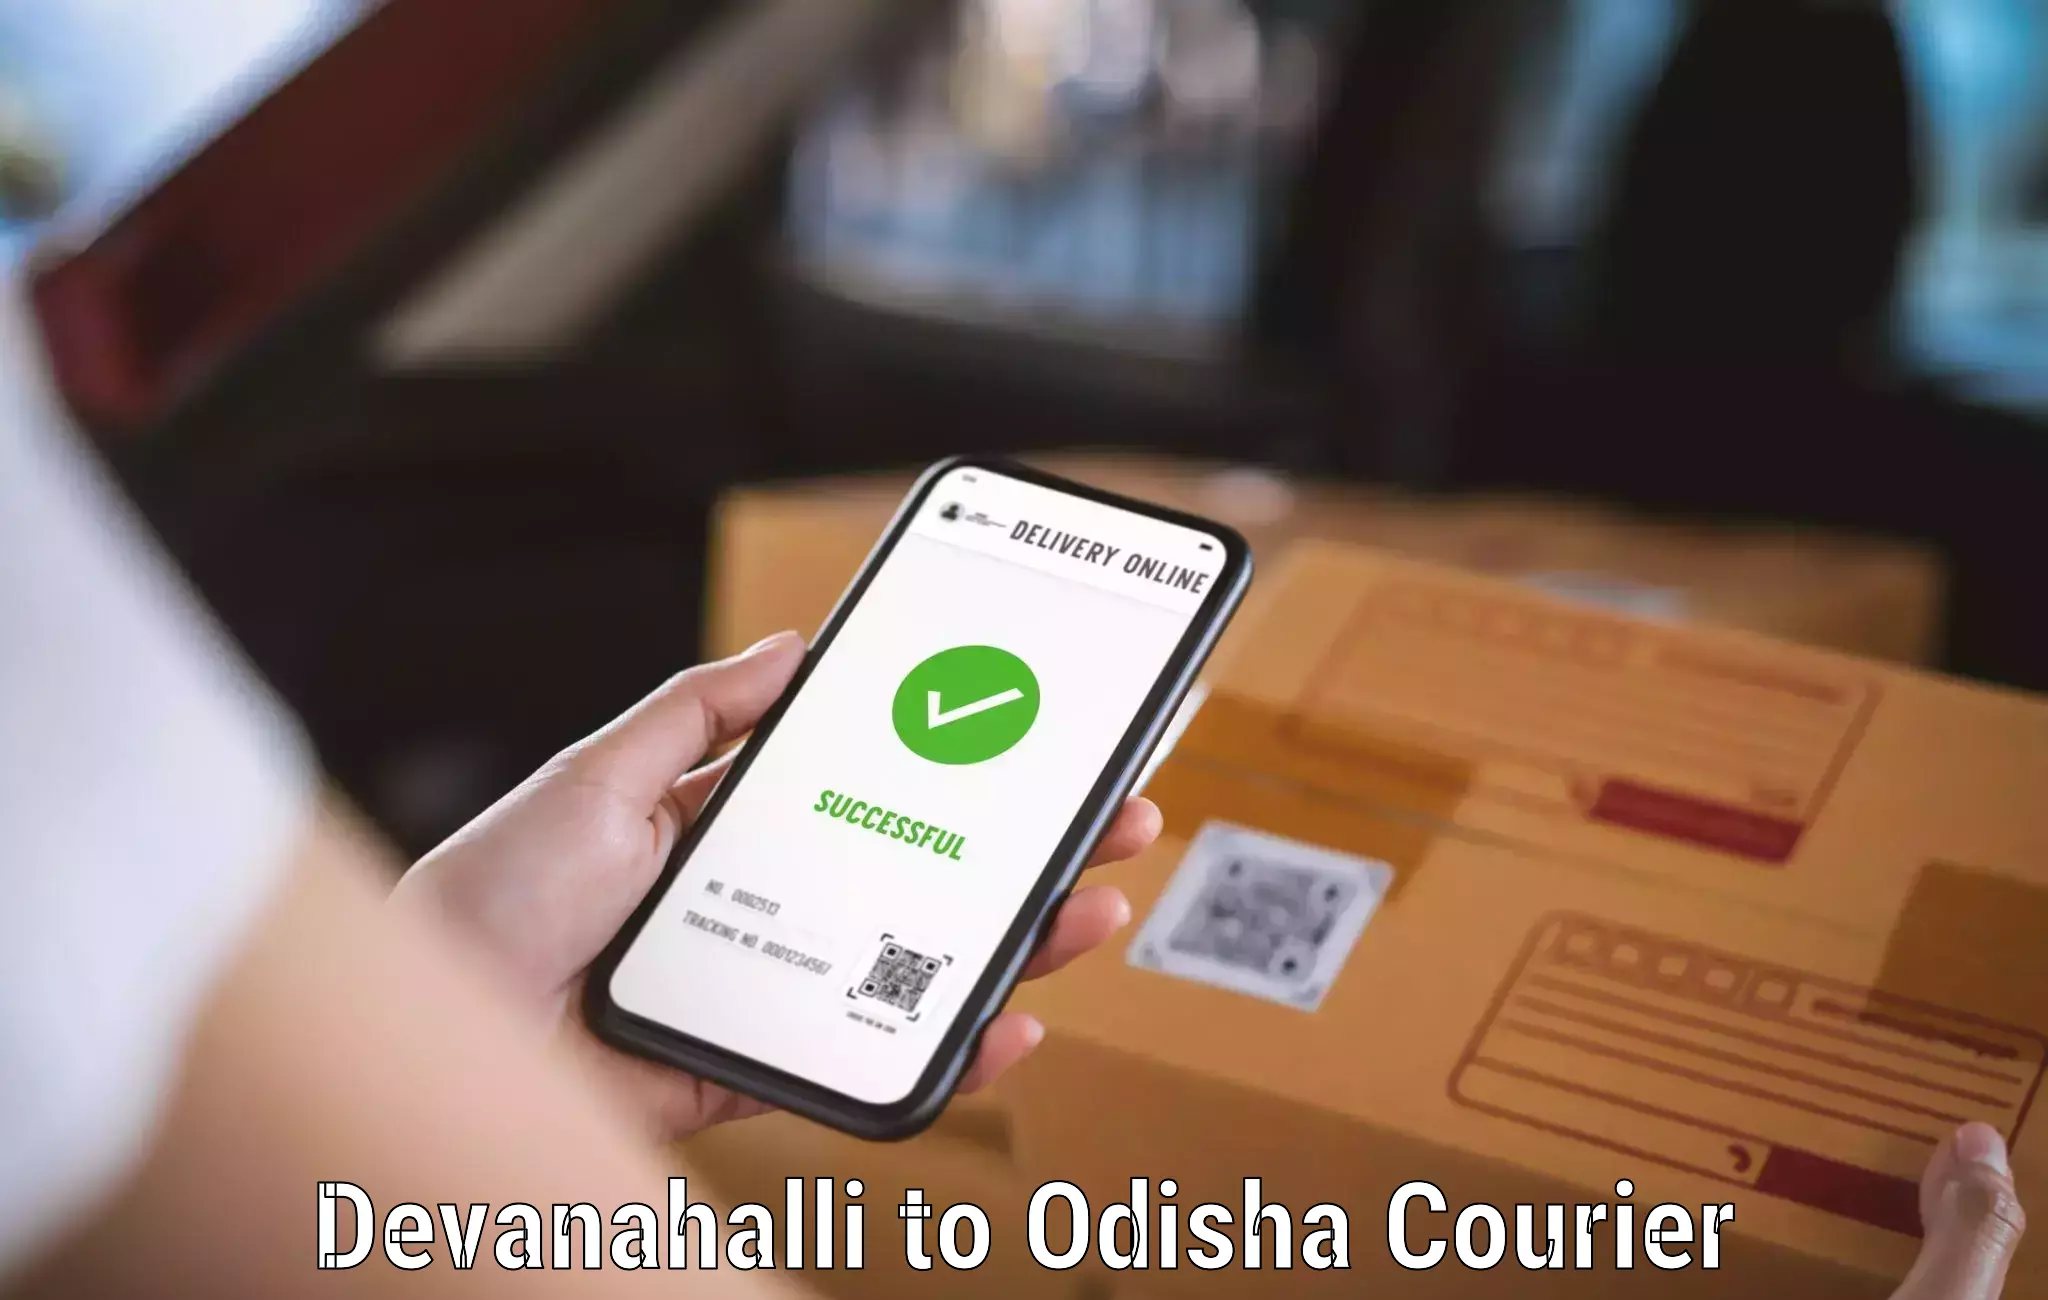 Cash on delivery service Devanahalli to Balinga